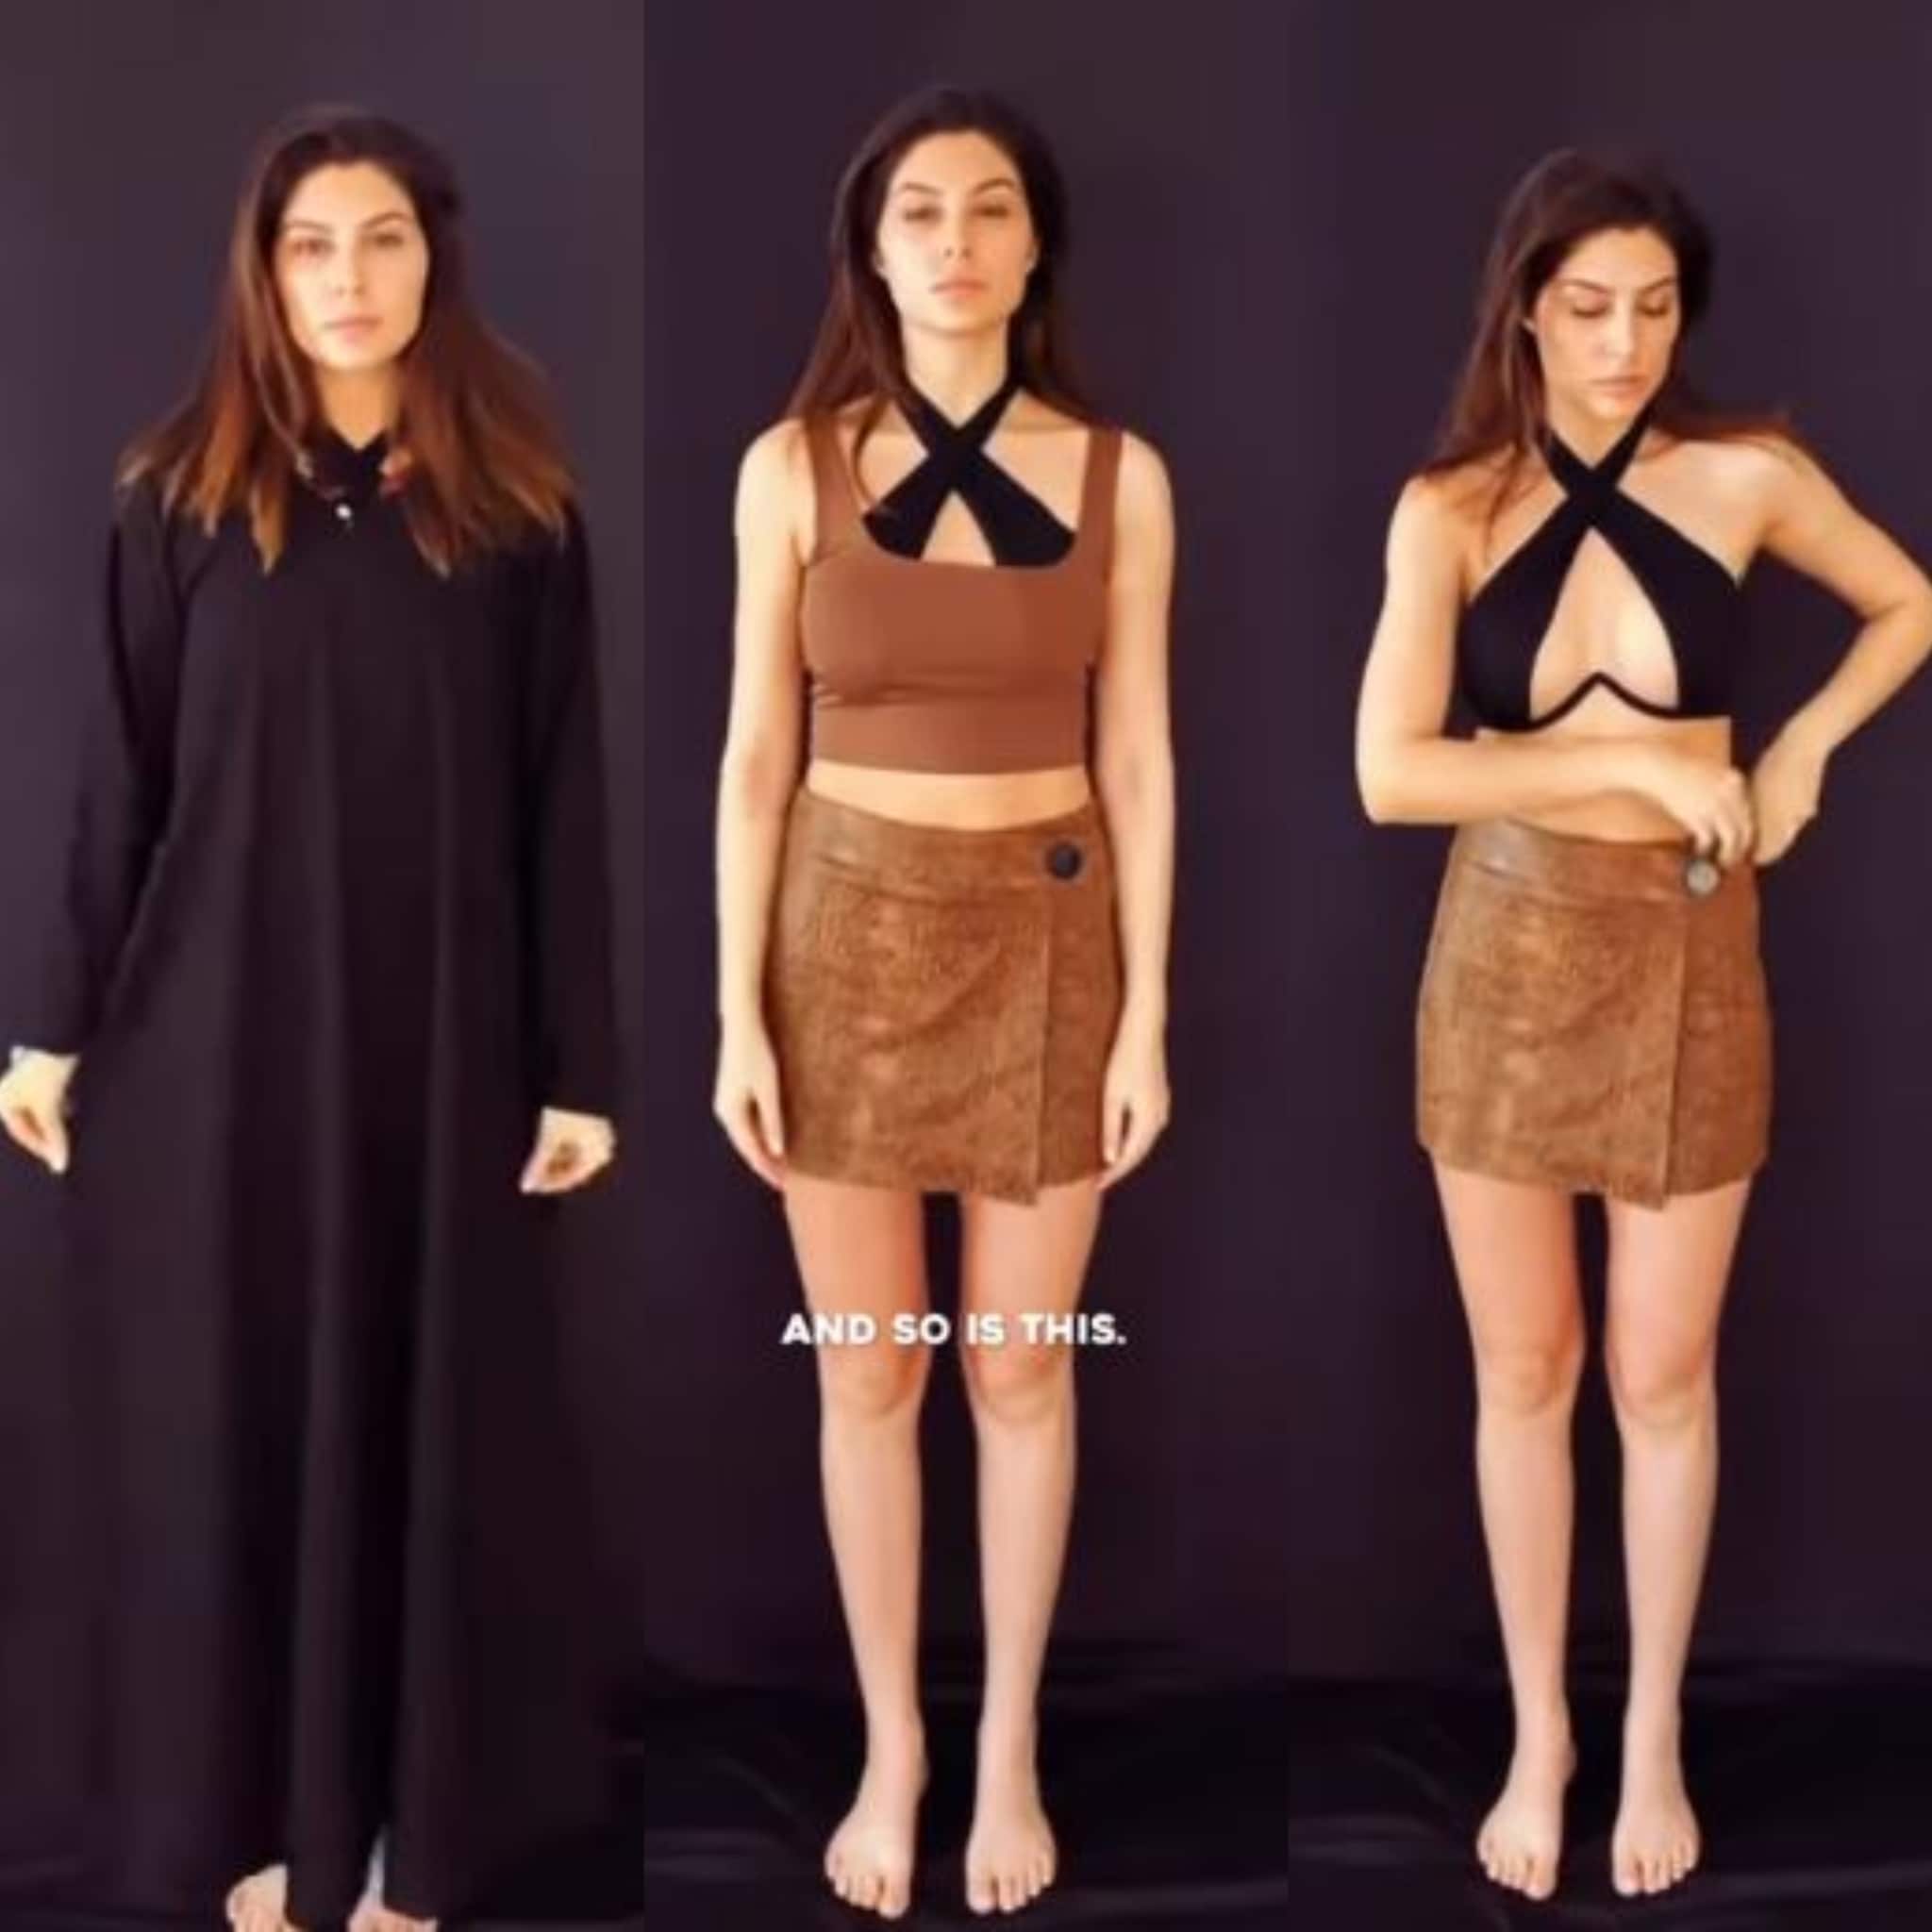 Elnaaz Norouzi Full Hd Porn Videos - Elnaaz Norouzi Strips Semi-Naked In Support of Iranian Women, Says  'Promoting Freedom of Choice' - News18